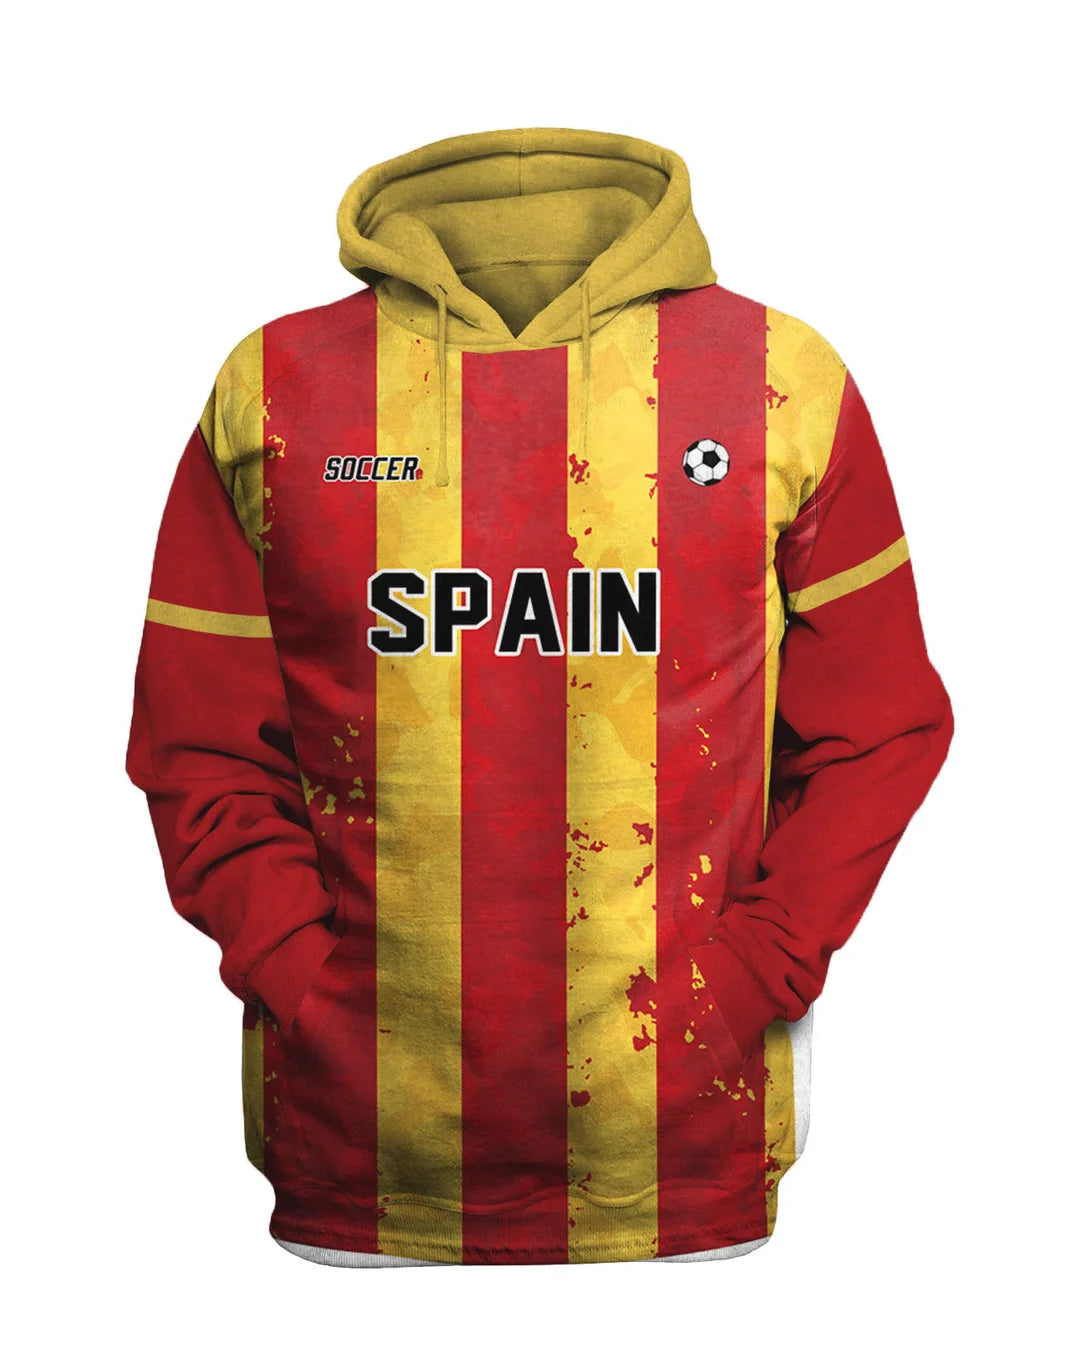 Spain National Football Team Printed Sweatshirt Set - DUVAL